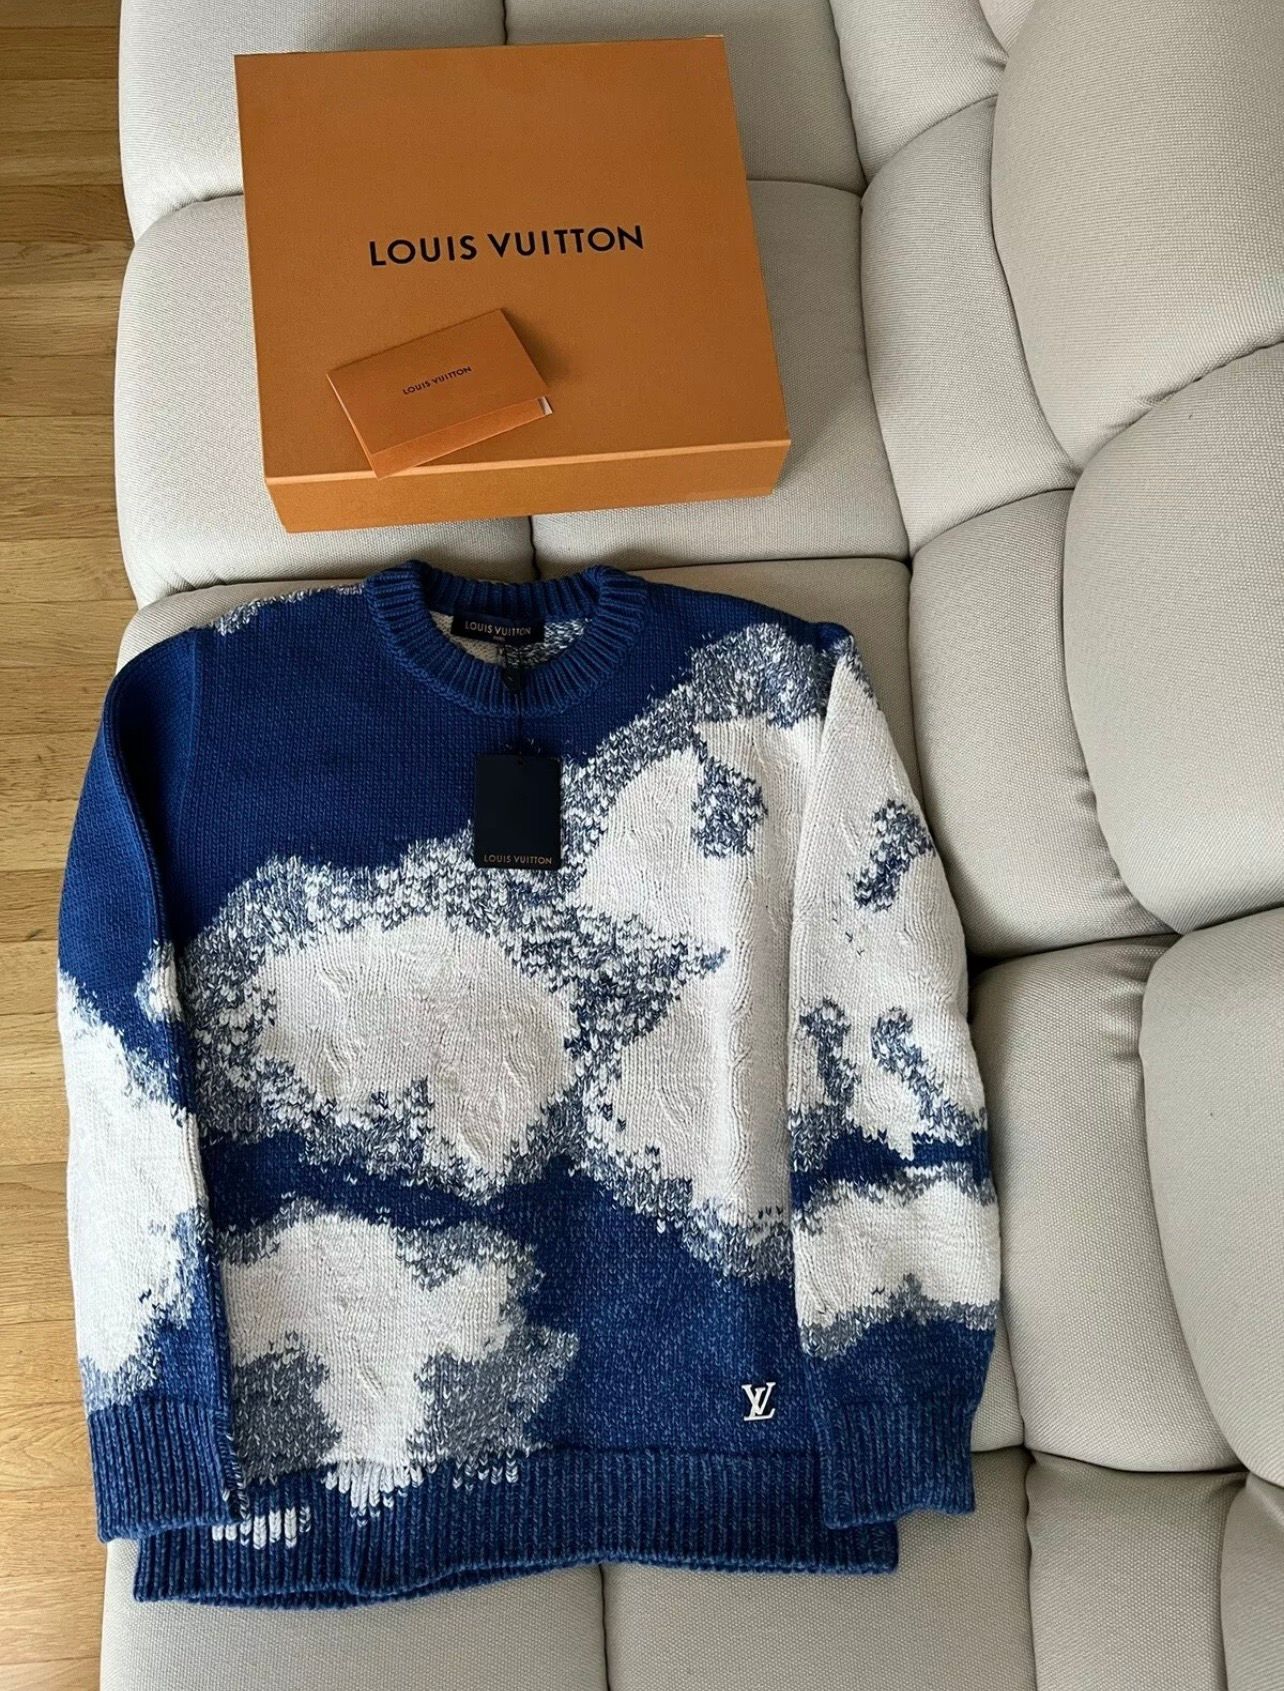 Louis Vuitton Malletier Clouds Crewneck Sweater - Authentic Luxury